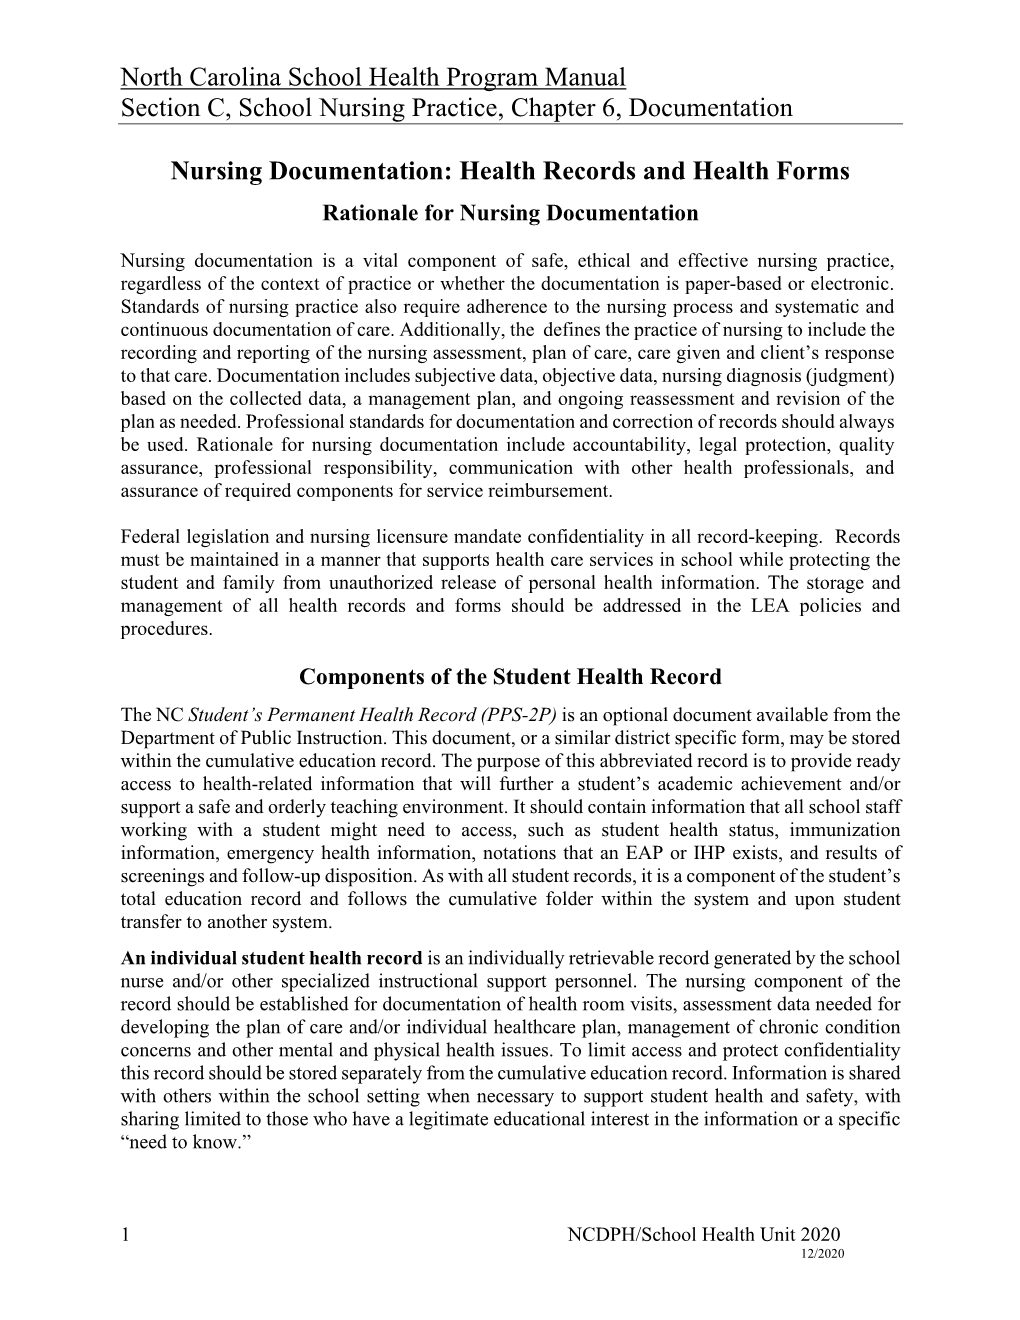 North Carolina School Health Program Manual Section C, School Nursing Practice, Chapter 6, Documentation